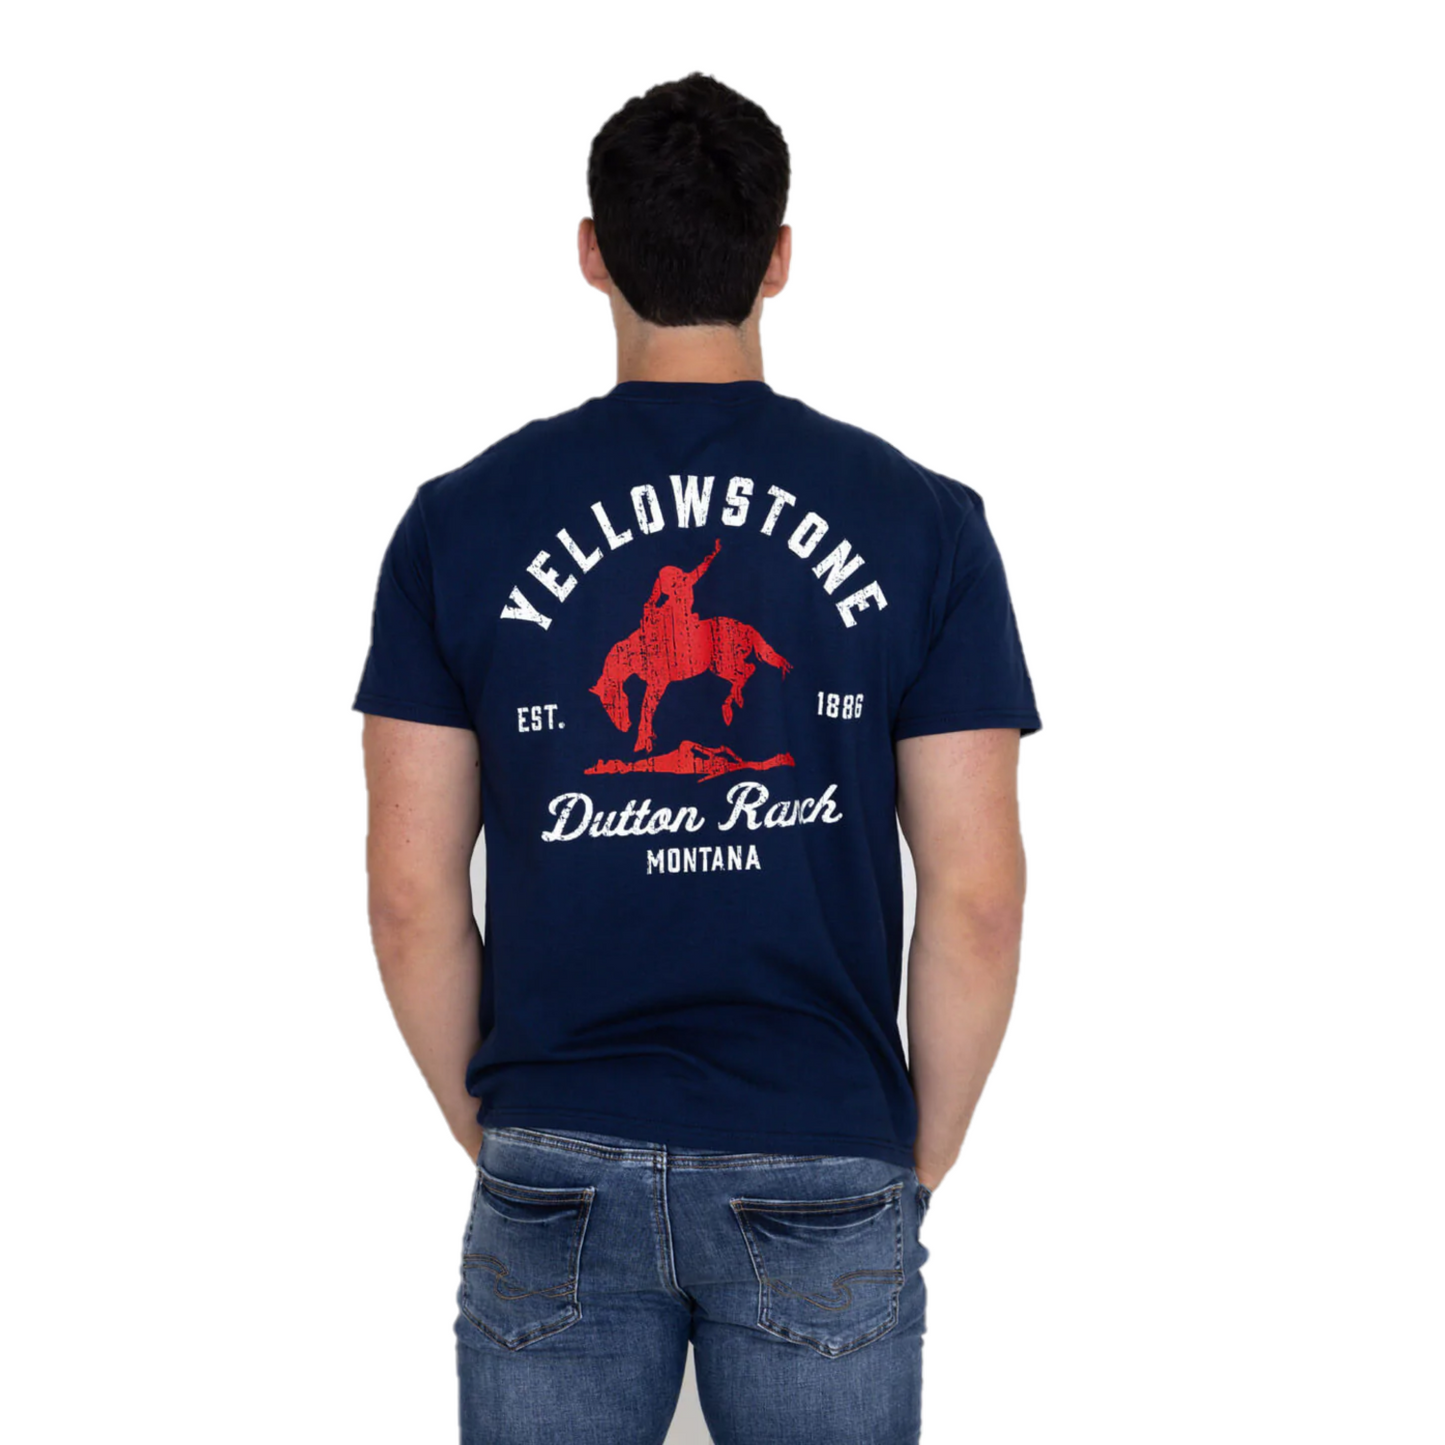 Yellowstone Men's Navy Blue Graphic Short Sleeve T-Shirt 66-331-68